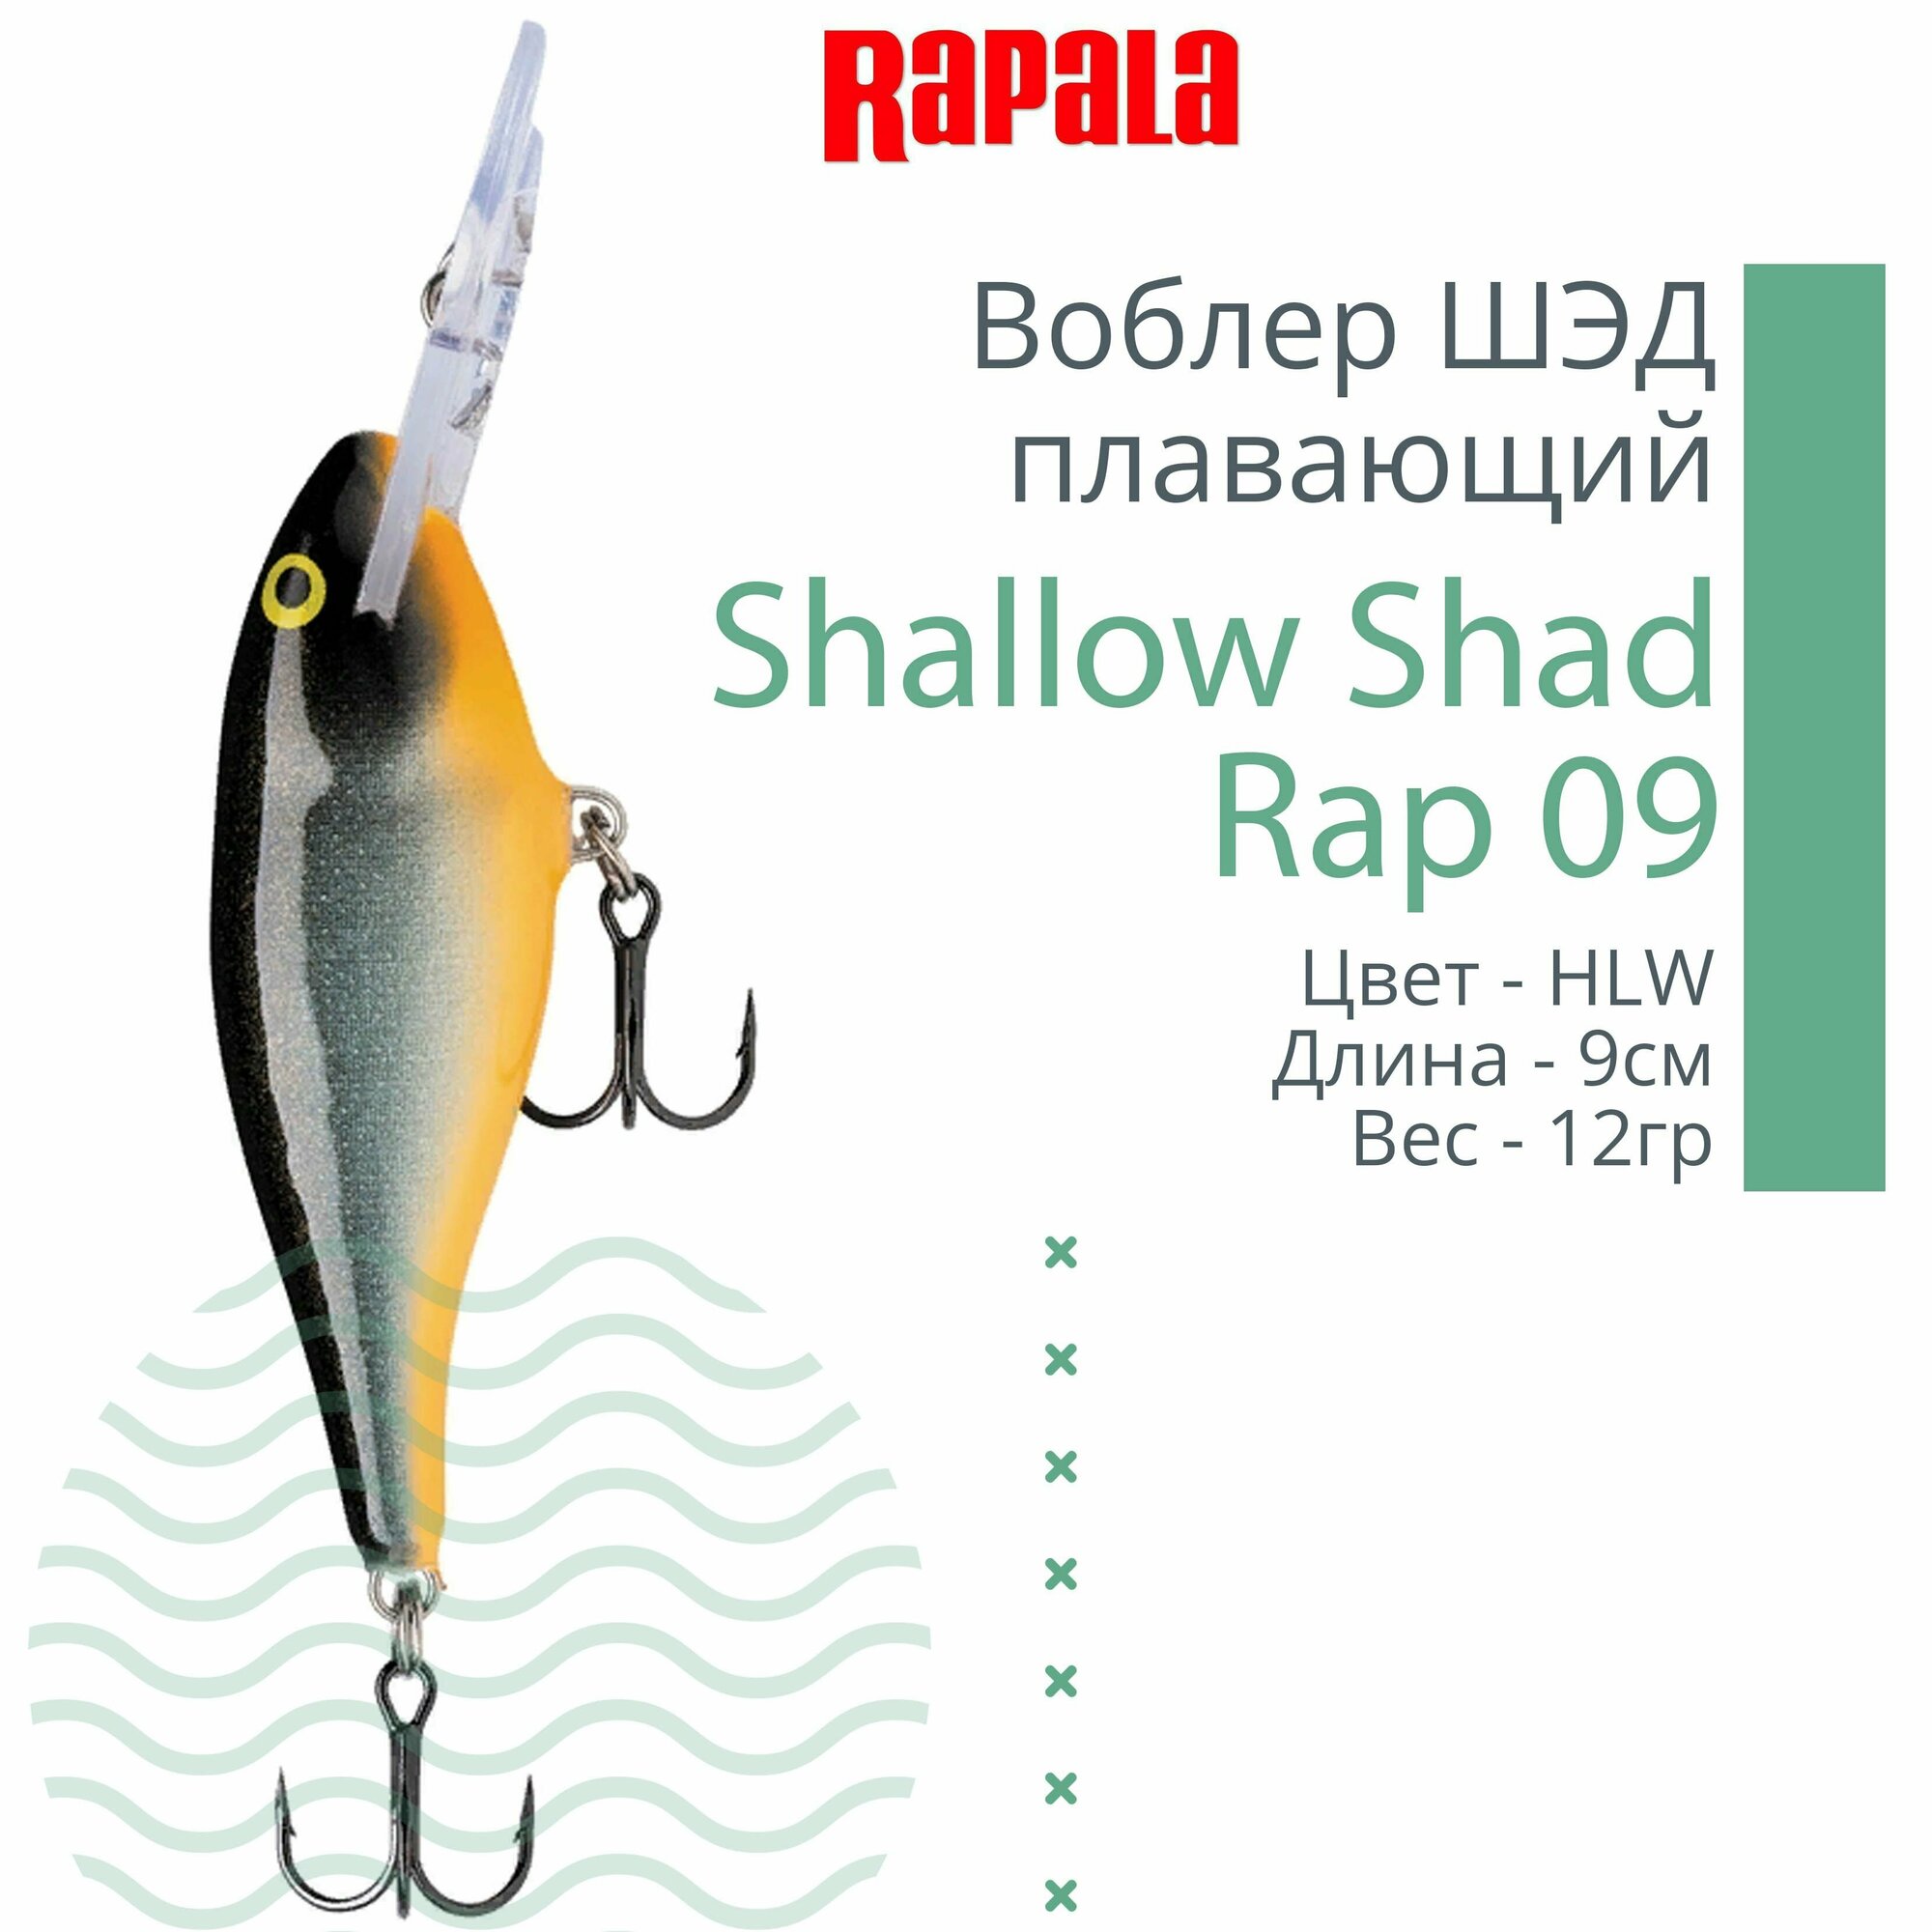 Воблер для рыбалки RAPALA Shallow Shad Rap 09, 9см, 12гр, цвет HLW, плавающий